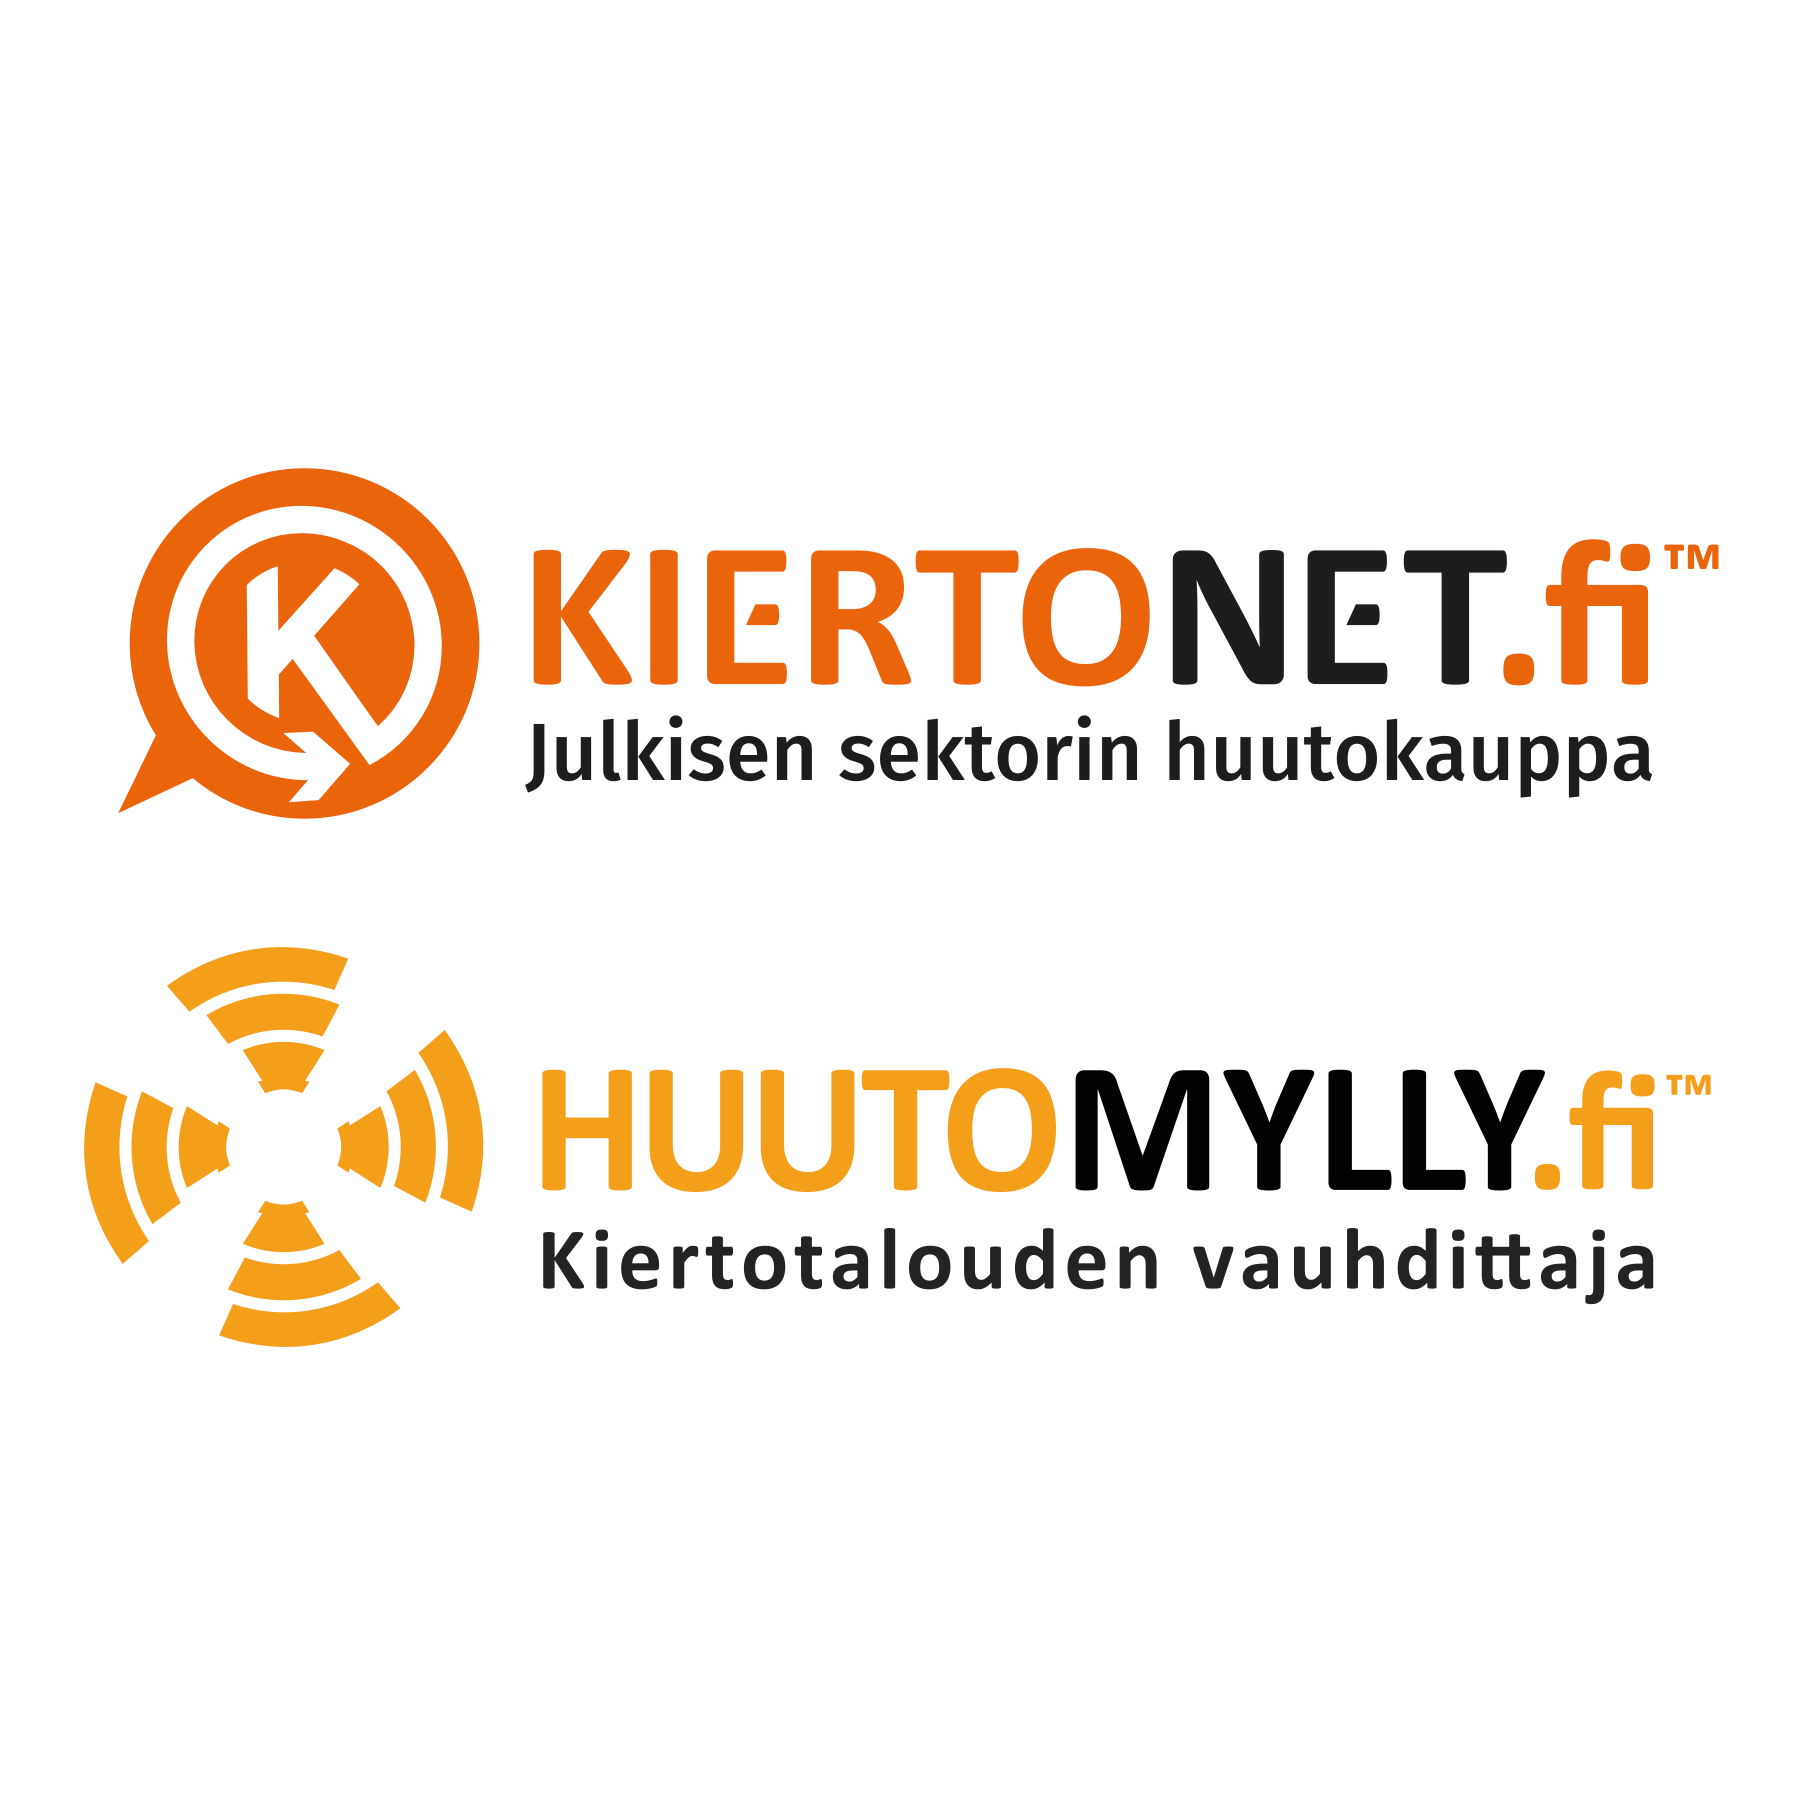 Kiertonet.fi ja Huutomylly.fi Logo